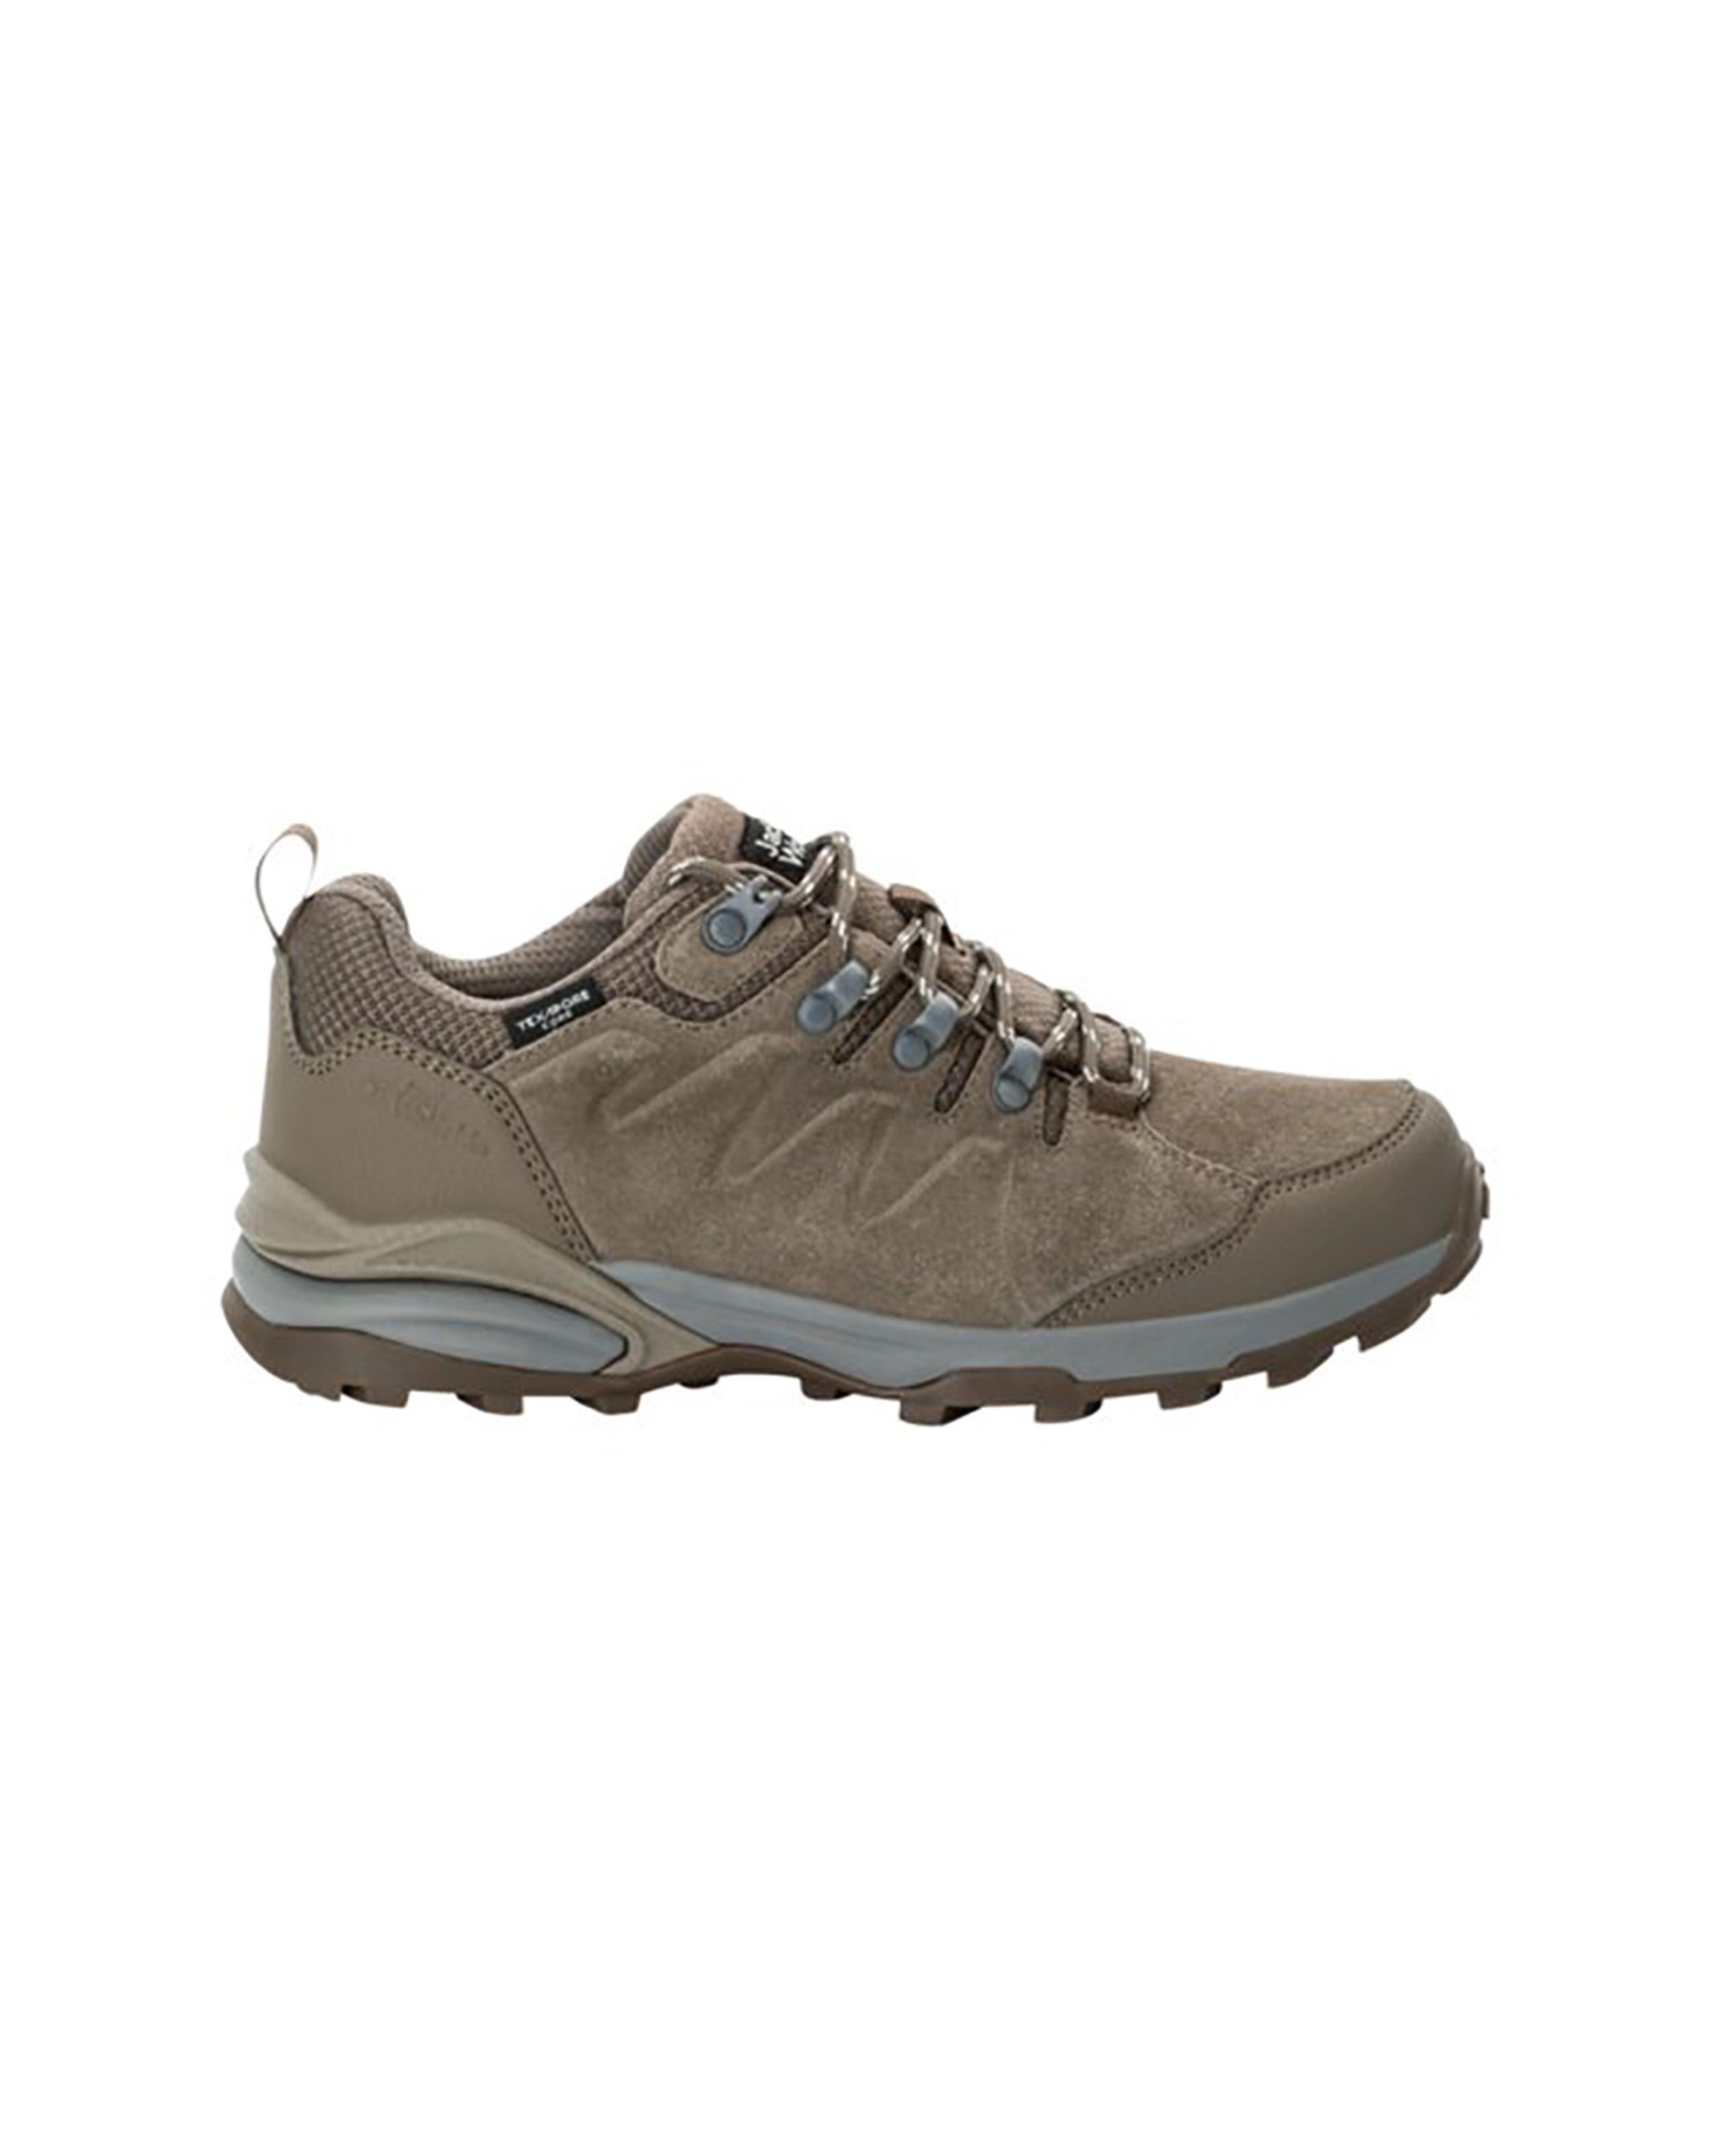 Jack Wolkfskin Women’s Refugio Texapore Low Hiking Shoes -  Brown